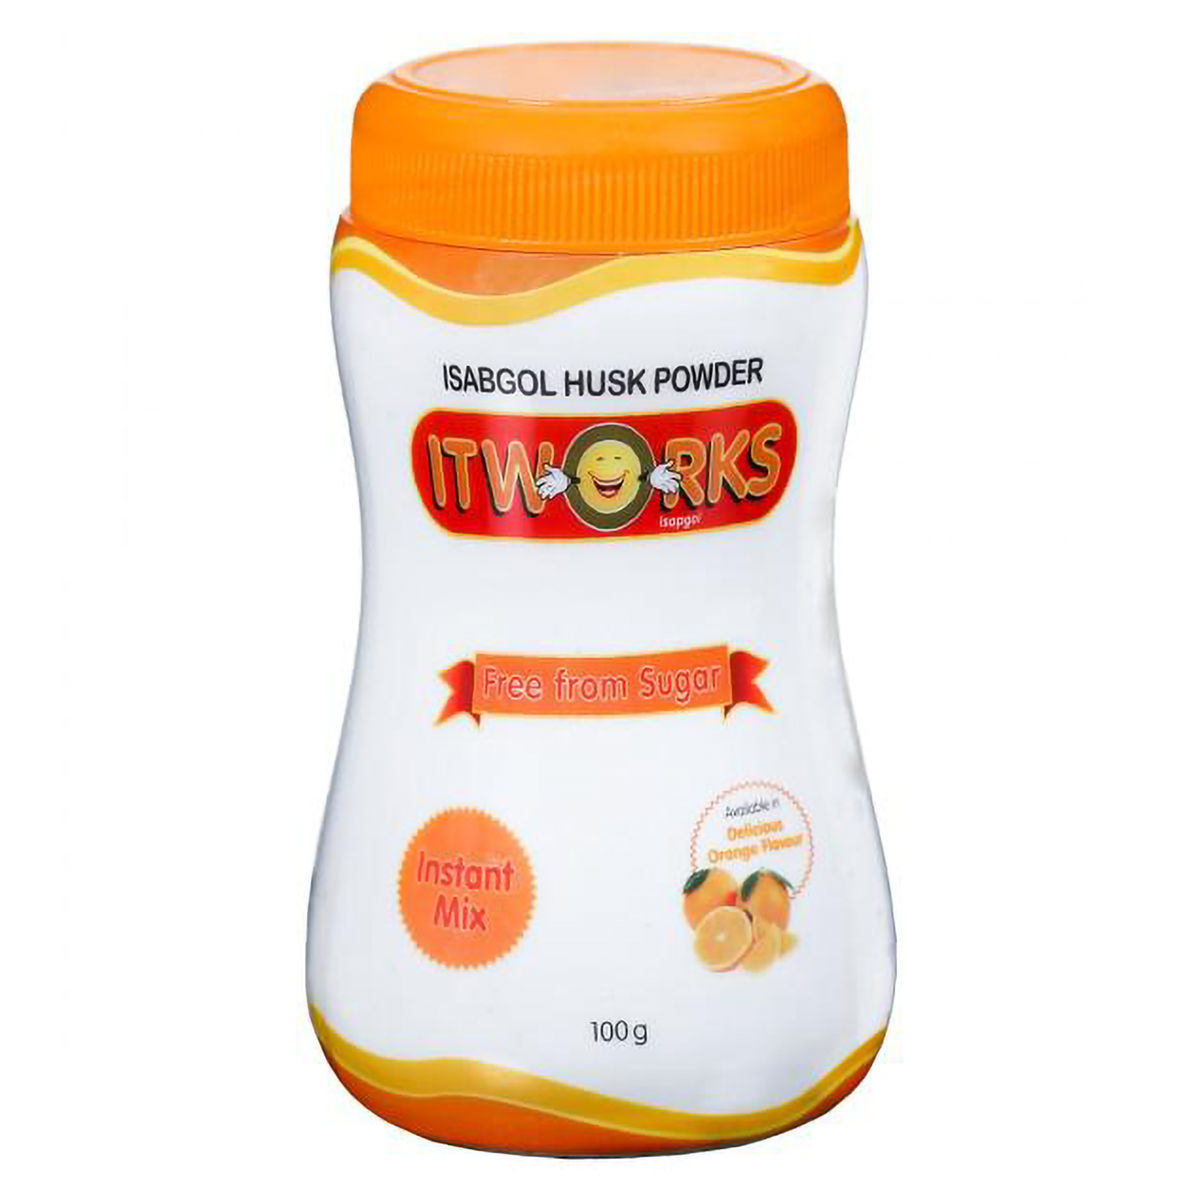 Buy Itworks Orange Flavour Isabgol Husk Powder, 100 gm Jar Online